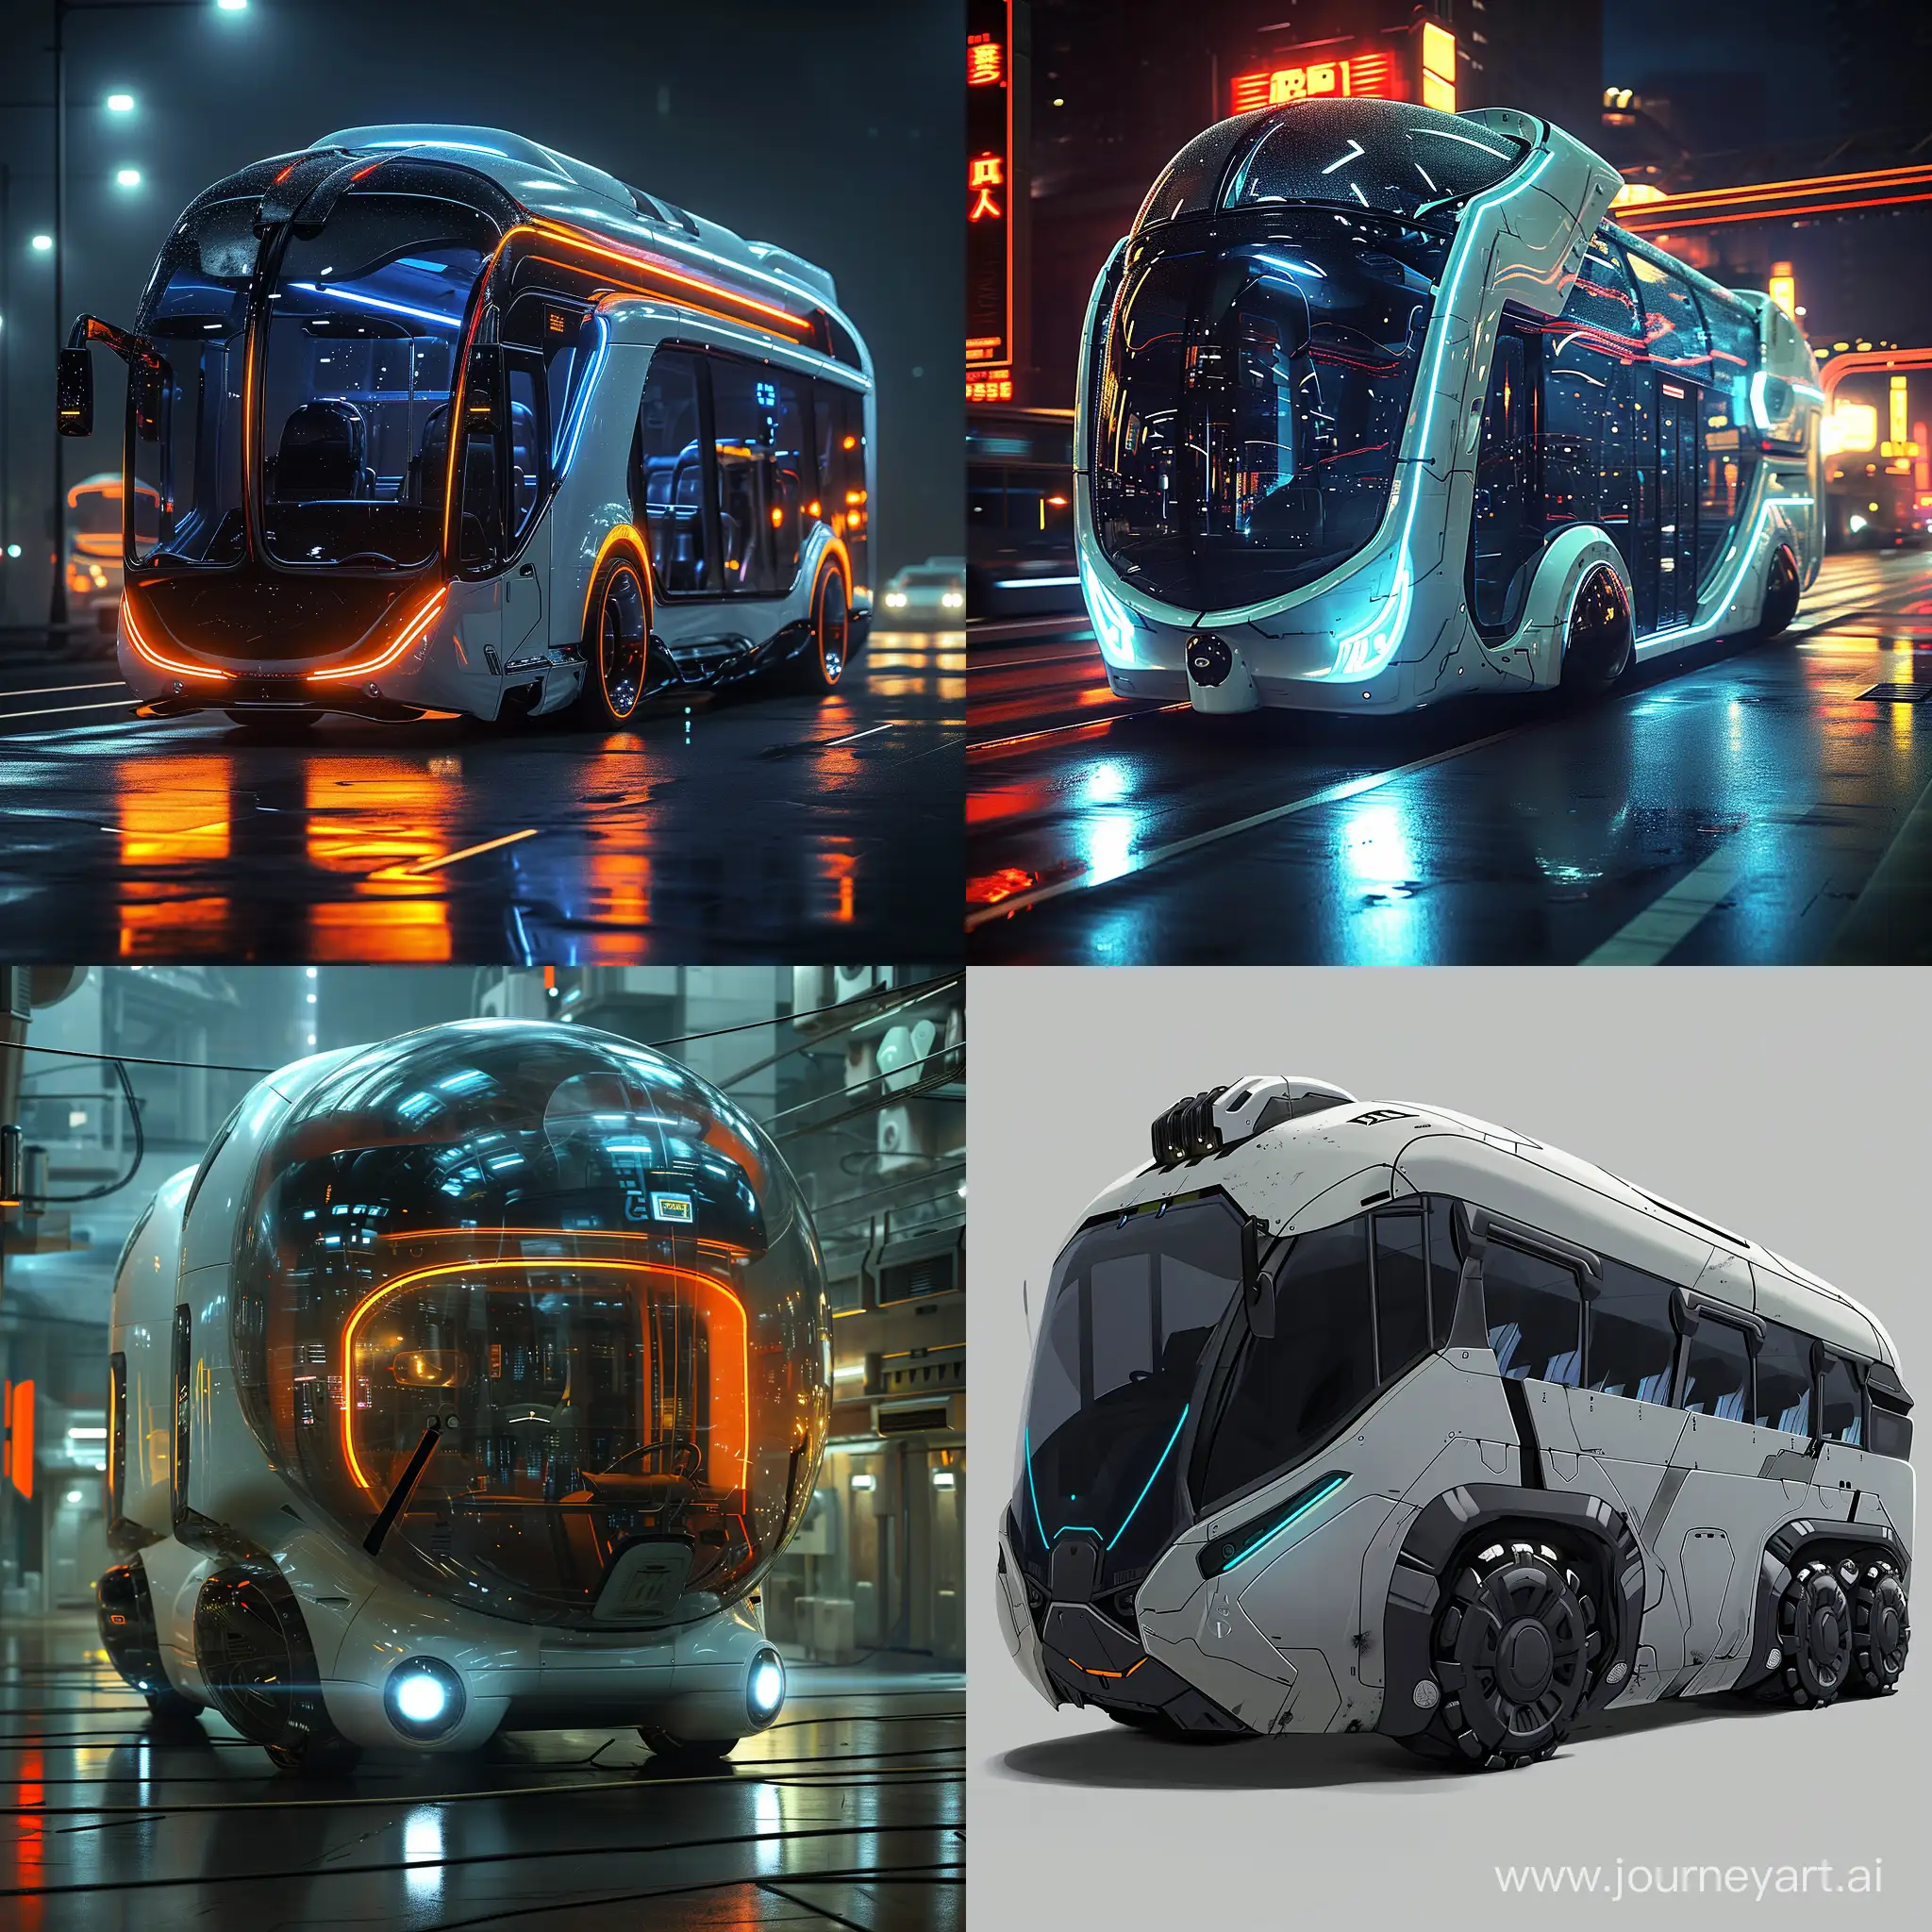 Futuristic-ImpactResistant-Bus-SciFi-Art-on-ArtStation-and-DeviantArt